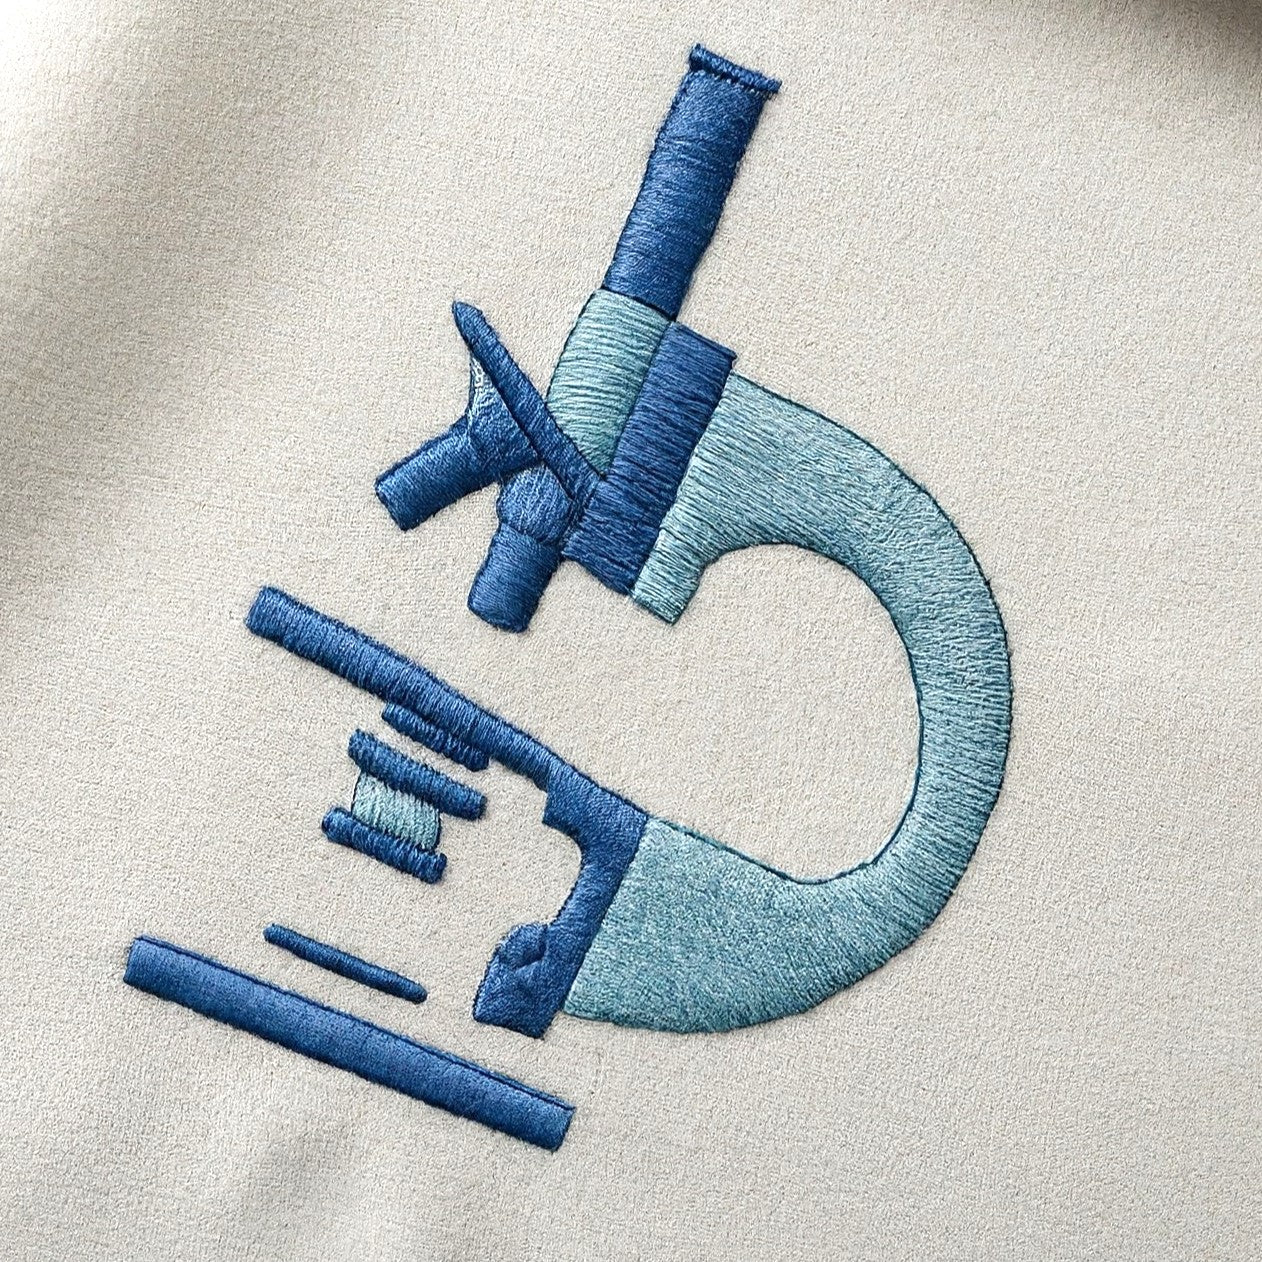 GLG - embroidered logo on lab coat